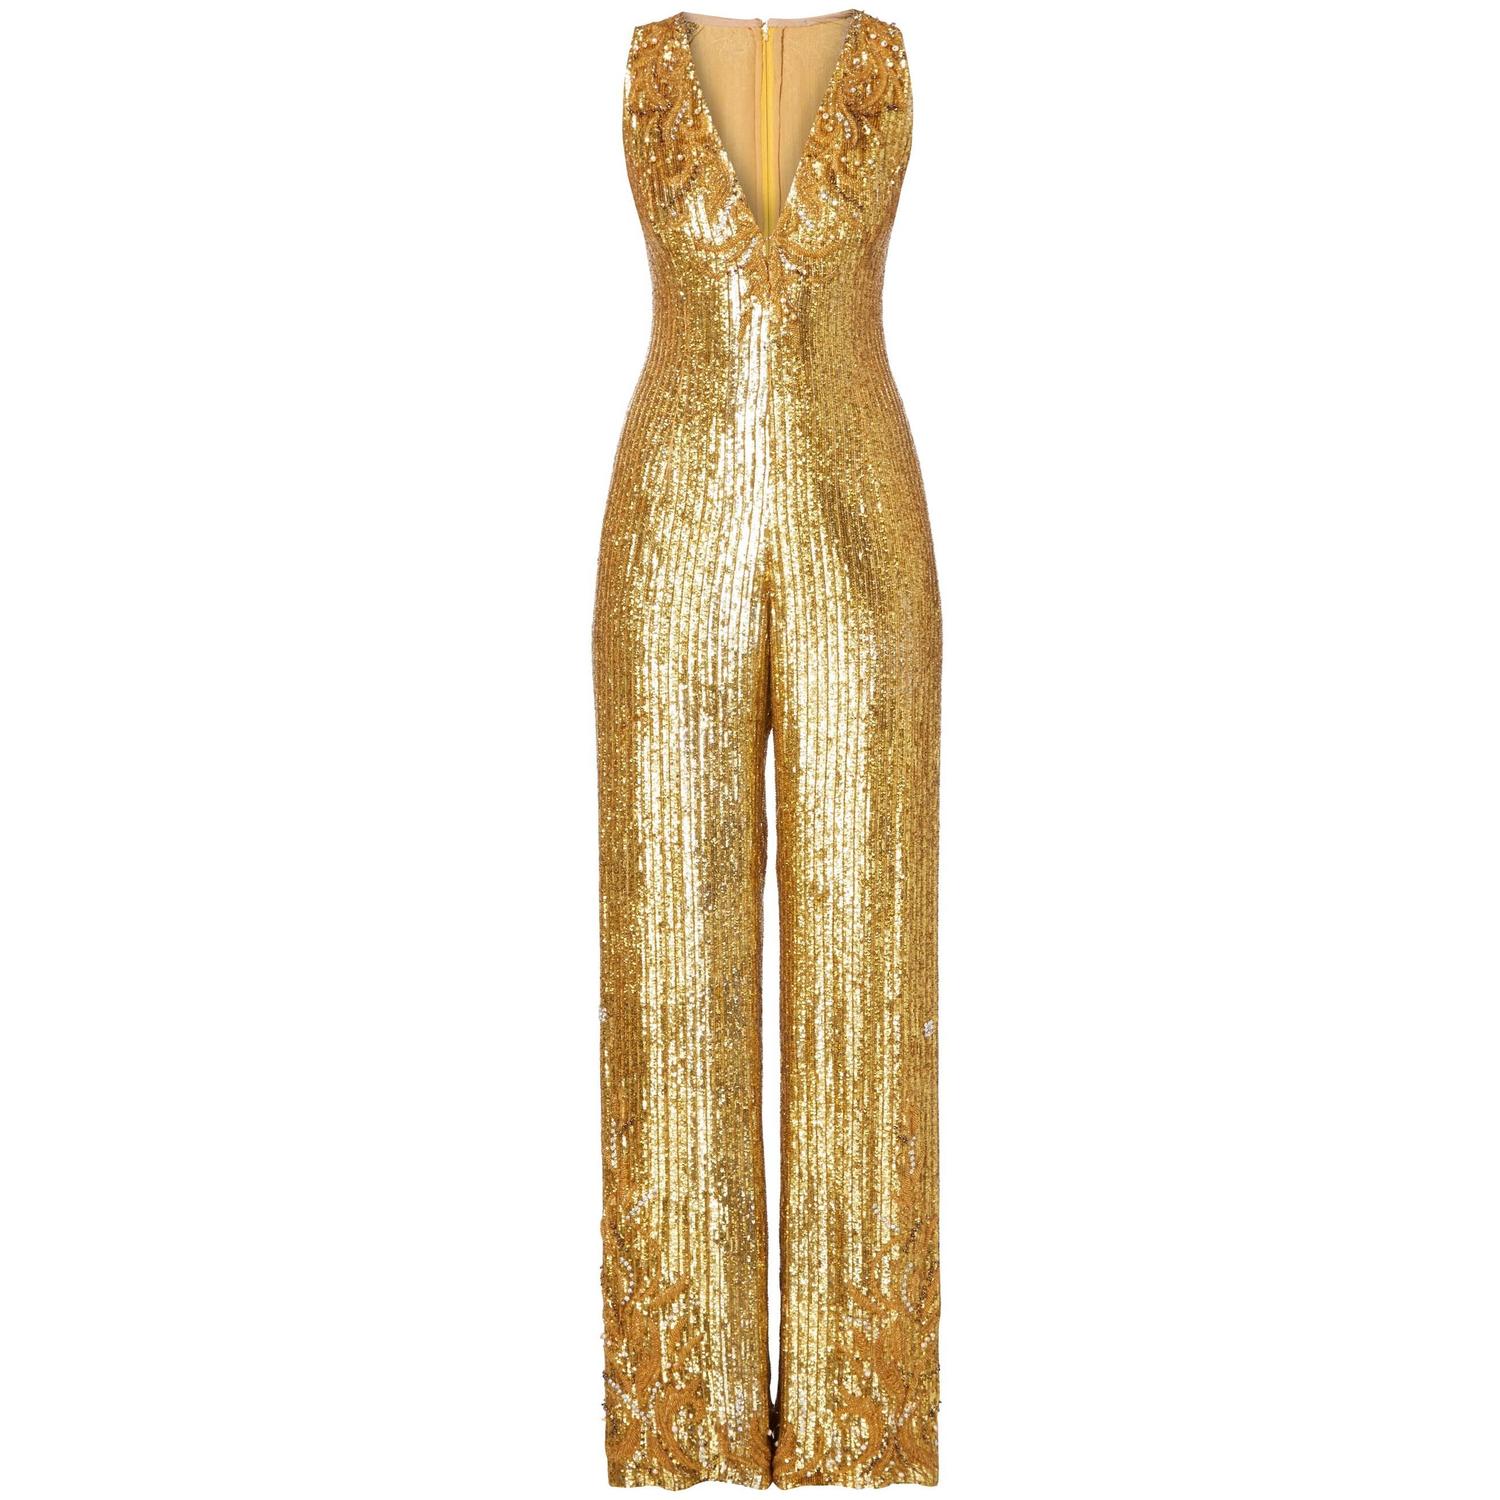 Balestra gold sequin jumpsuit, circa 1990 at 1stdibs